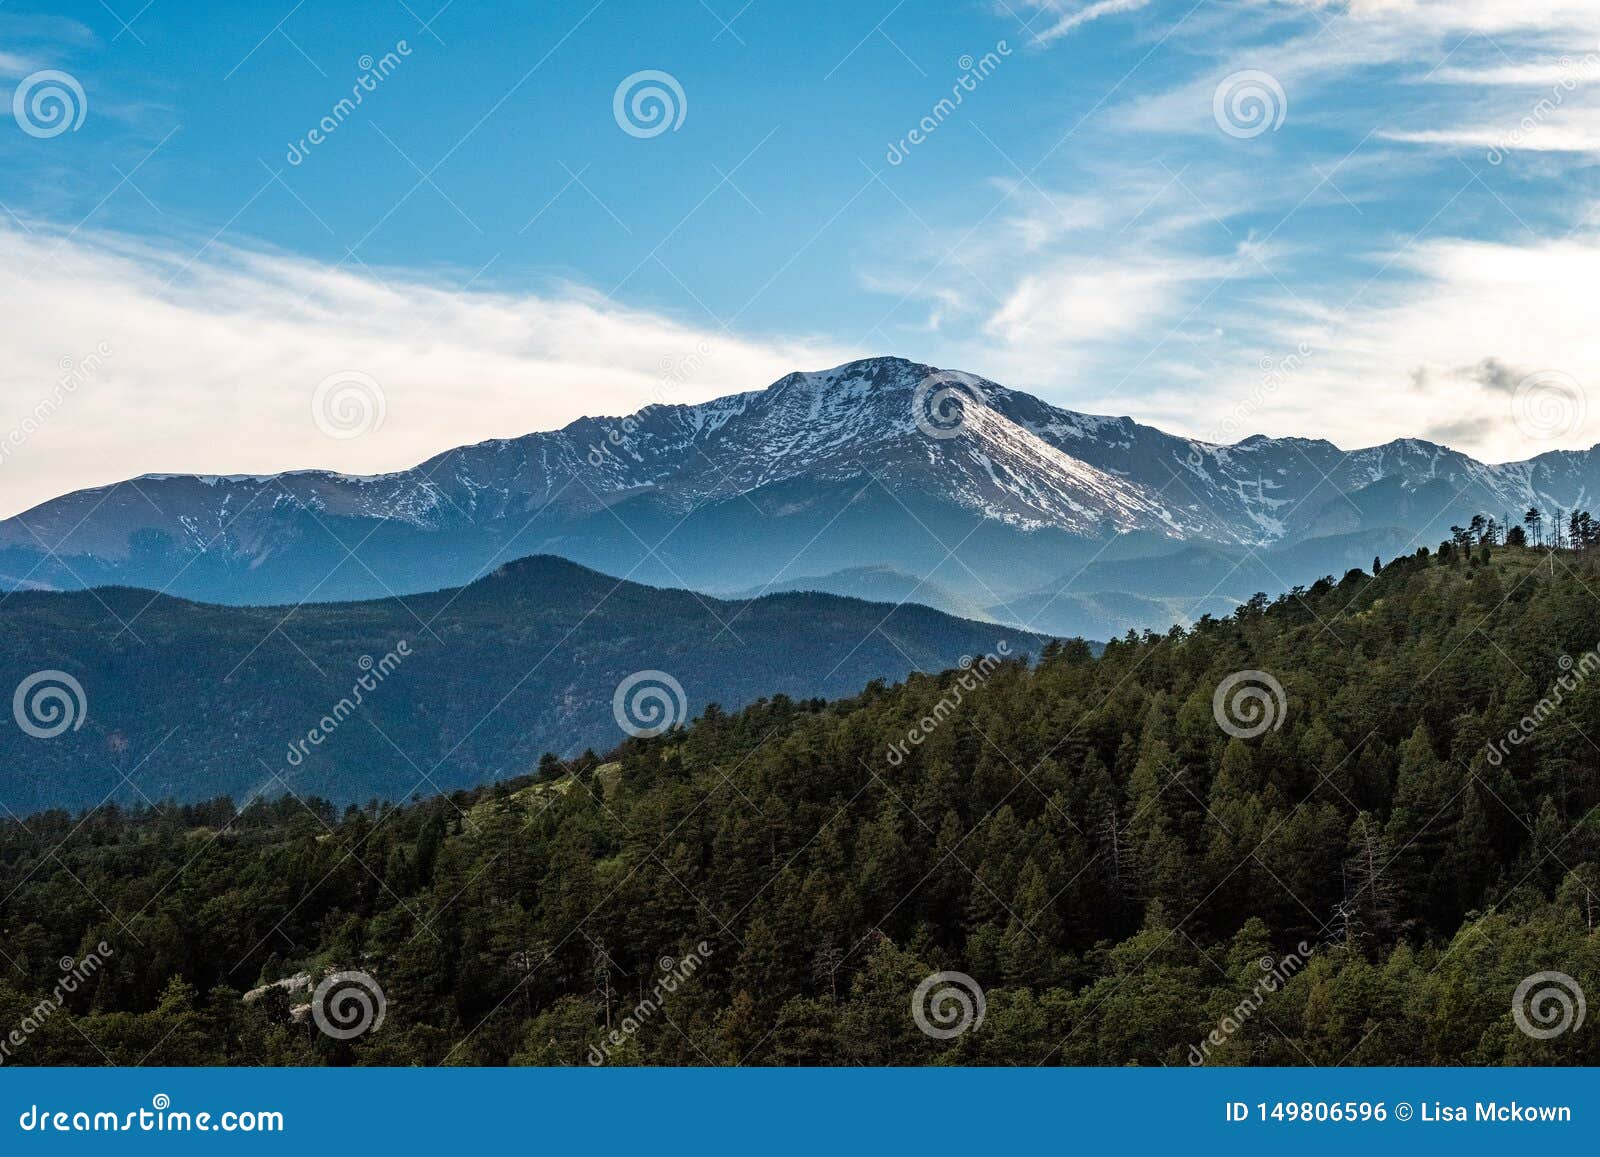 pikes peak mountain range colorado springs